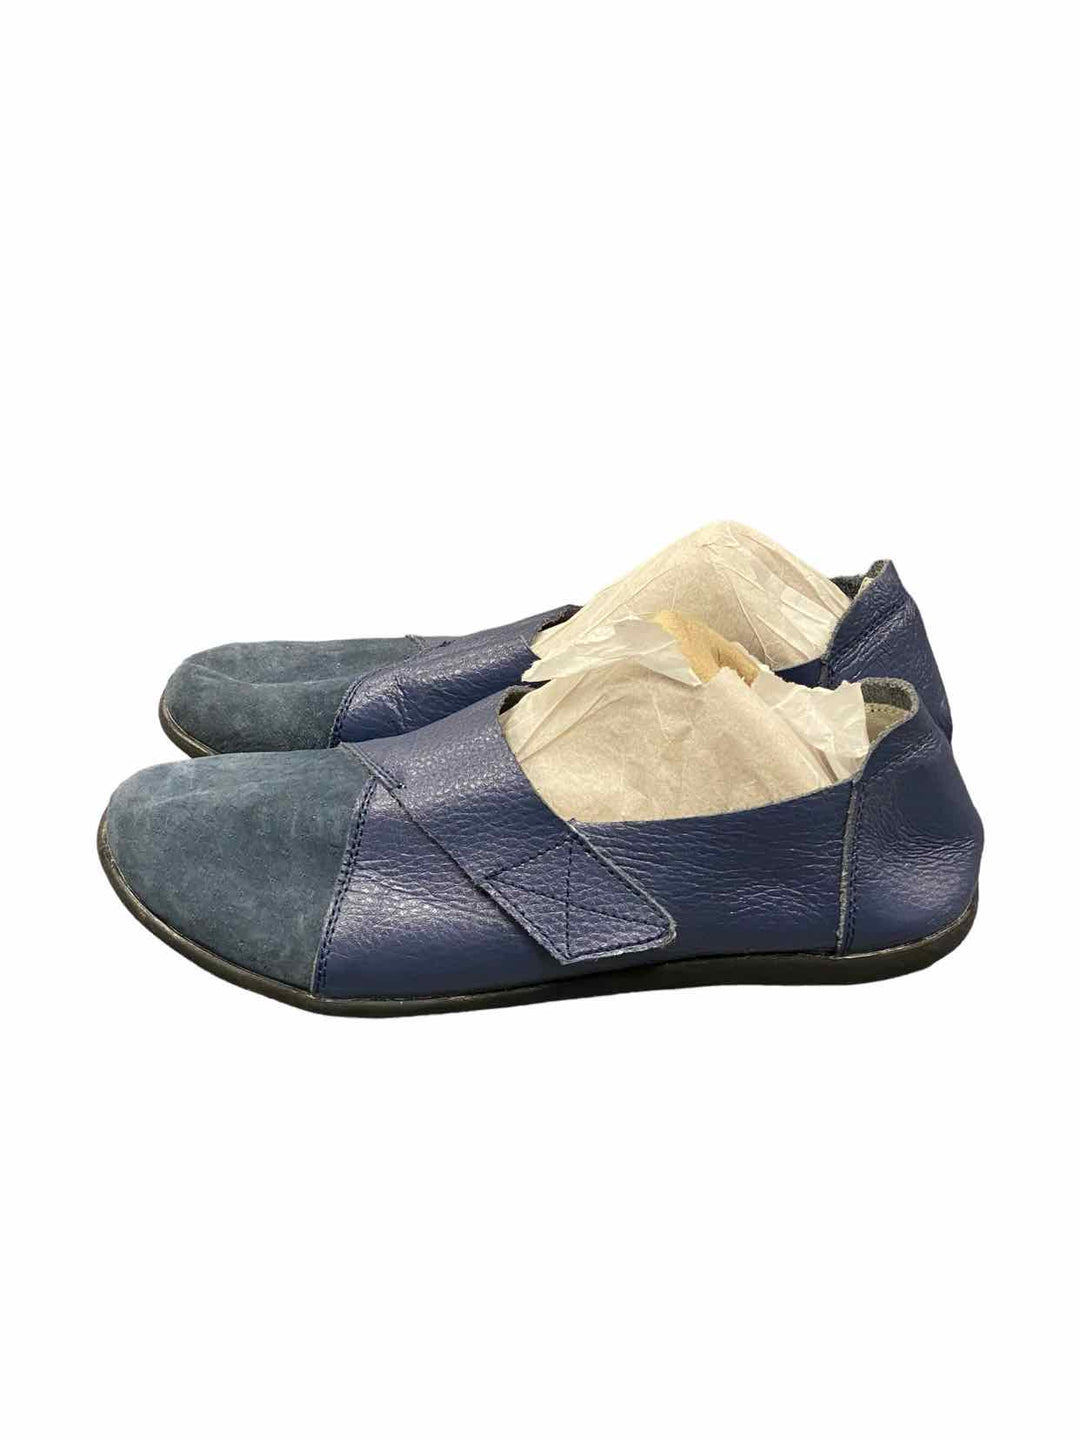 Unknown Shoe Size 37 Blue Flats